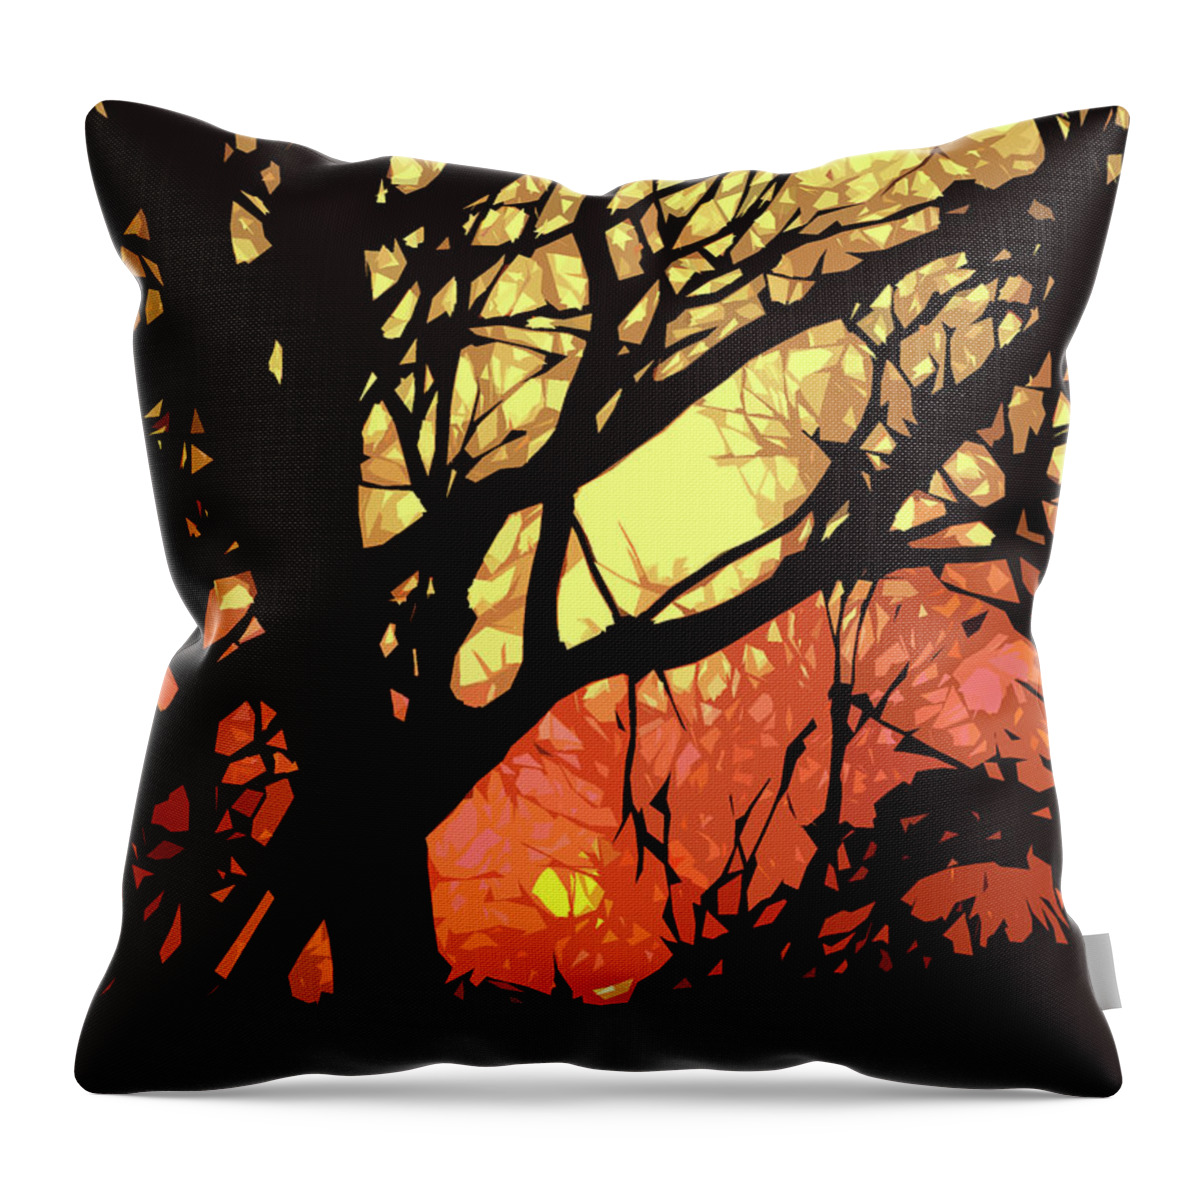 Sunset Throw Pillow featuring the digital art Spectacular Sunset by Nancy Olivia Hoffmann